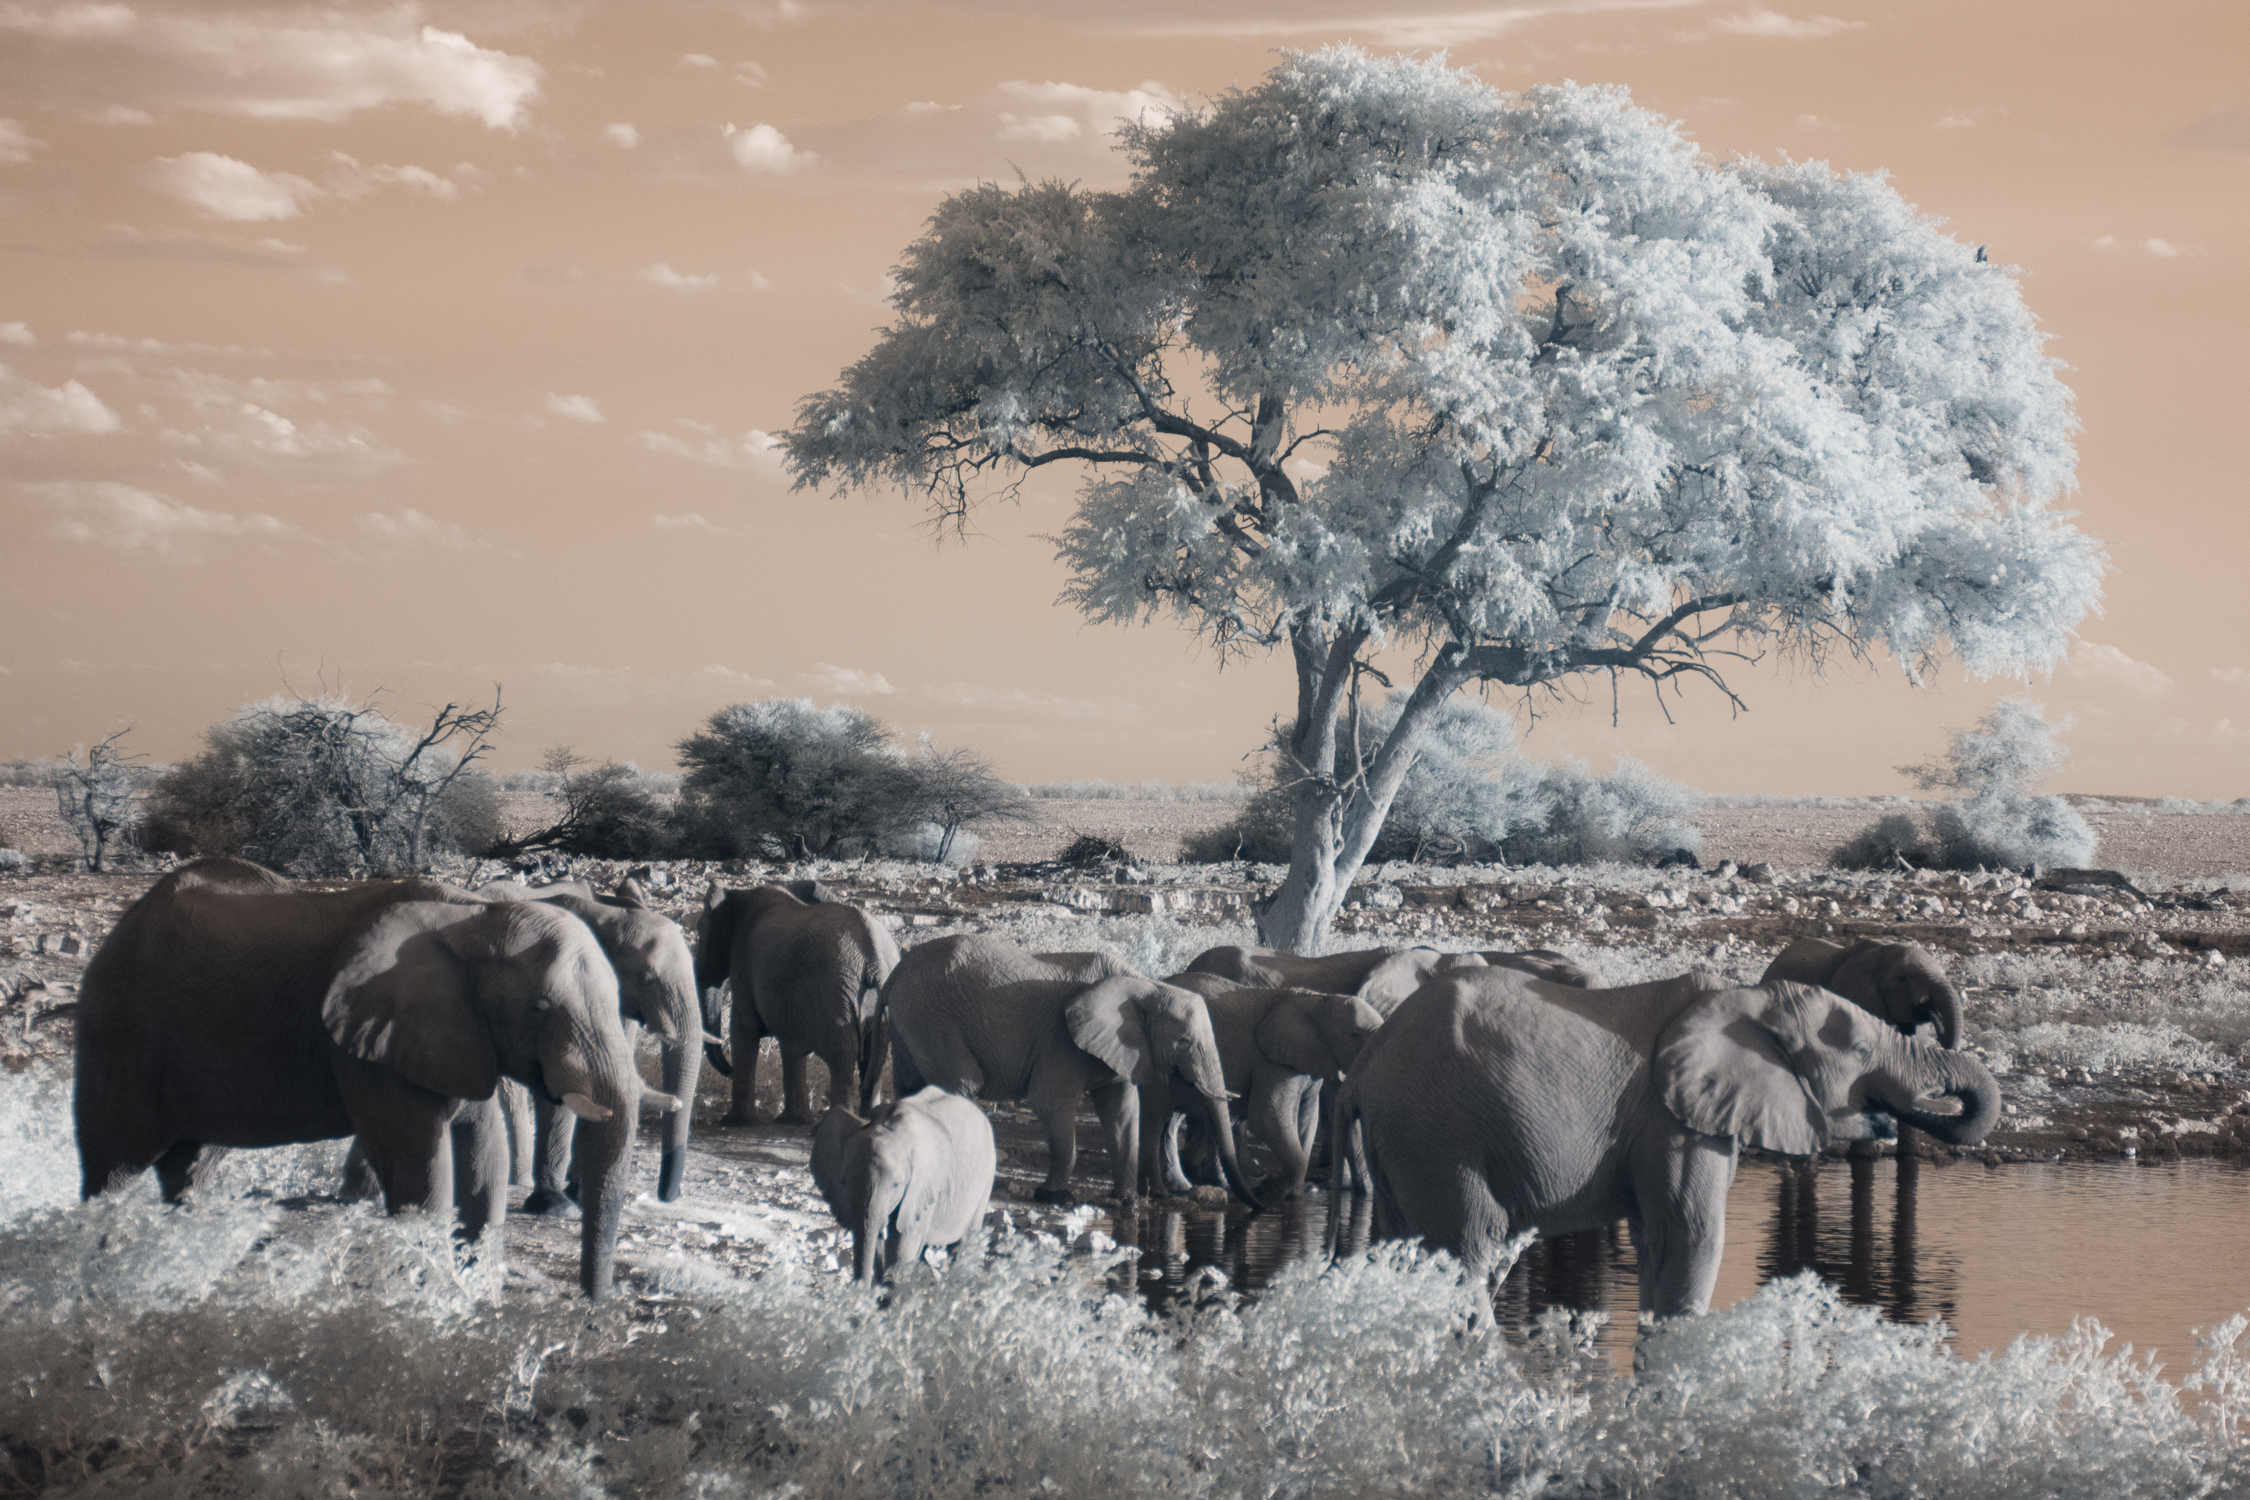  Elephants at Etosha National Park.&nbsp; 